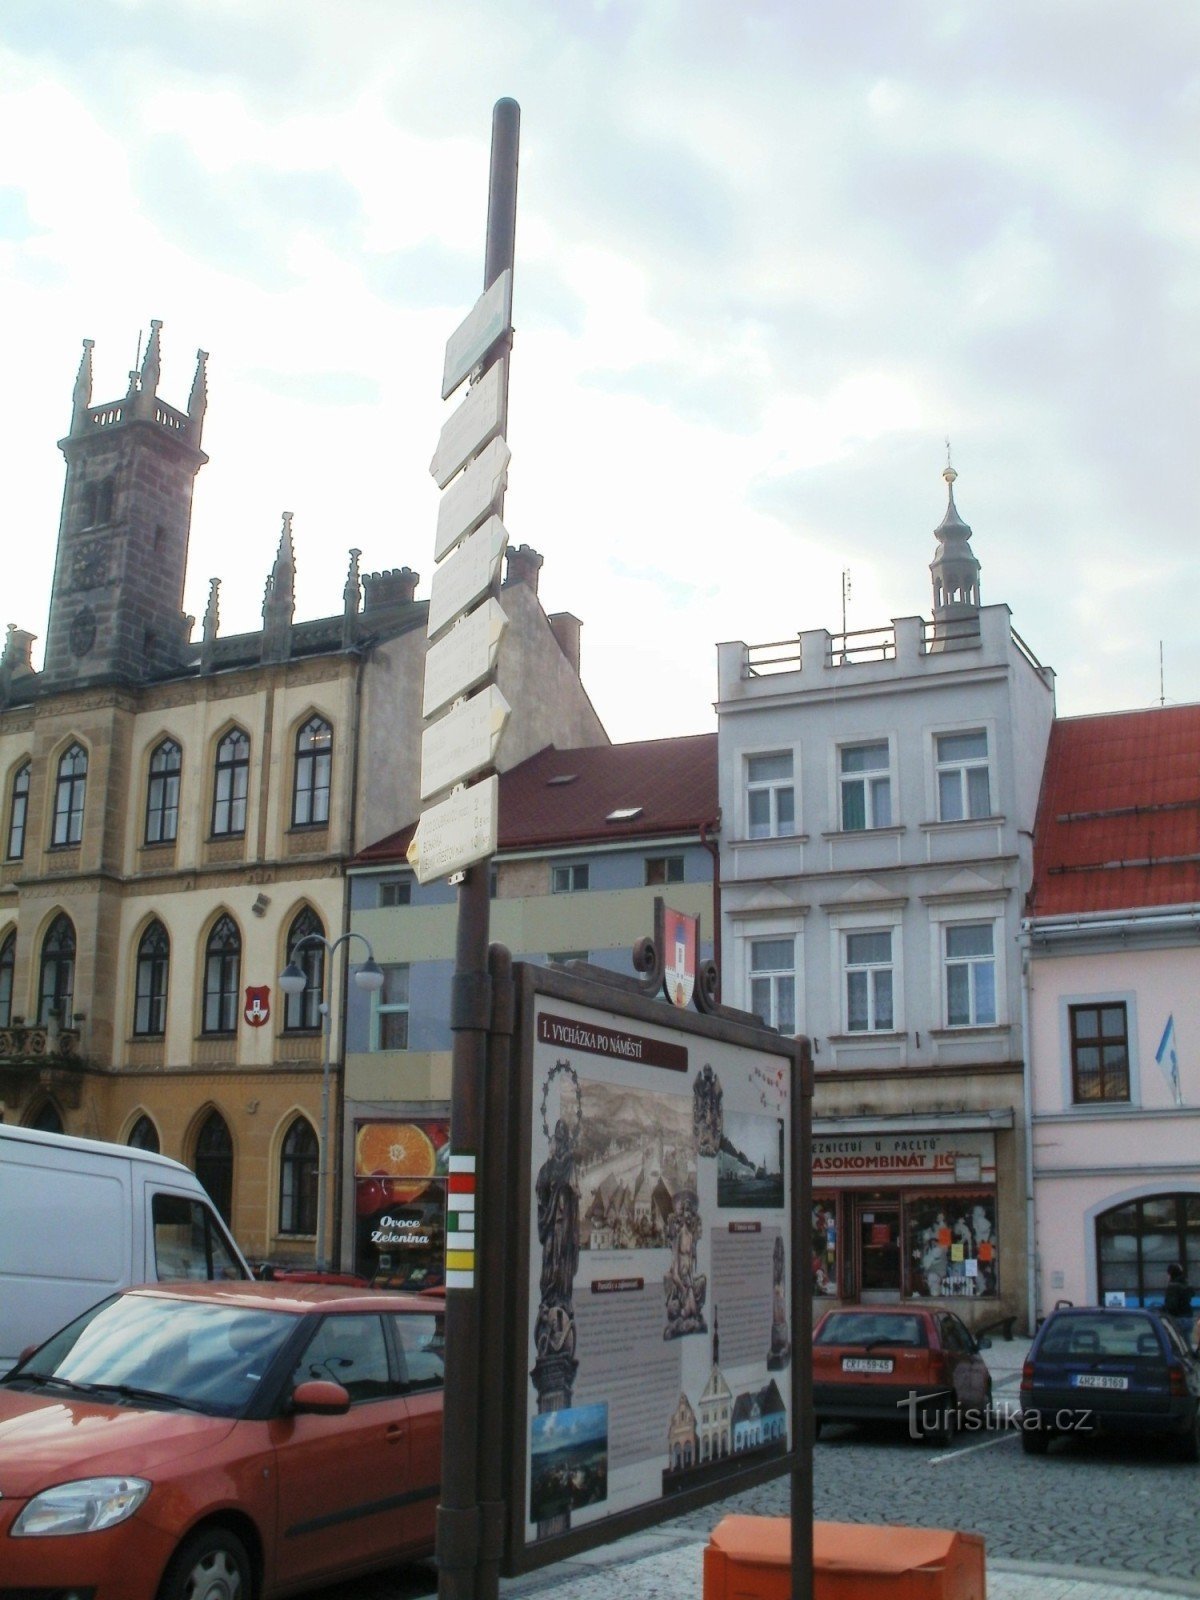 Hořice - principalul indicator turistic